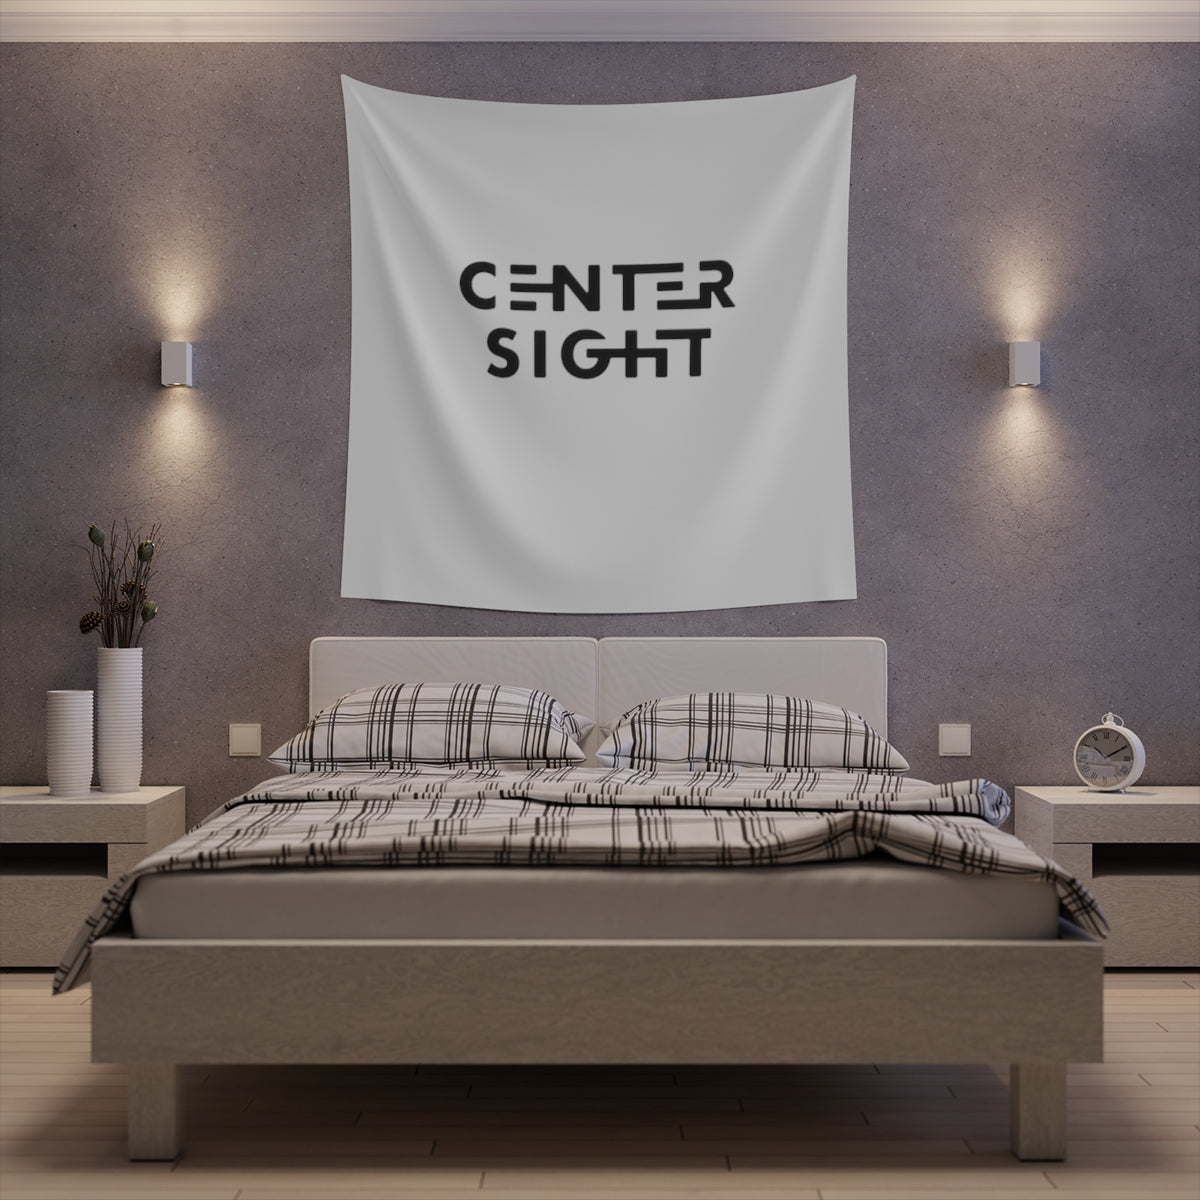 Centersight Tapestry